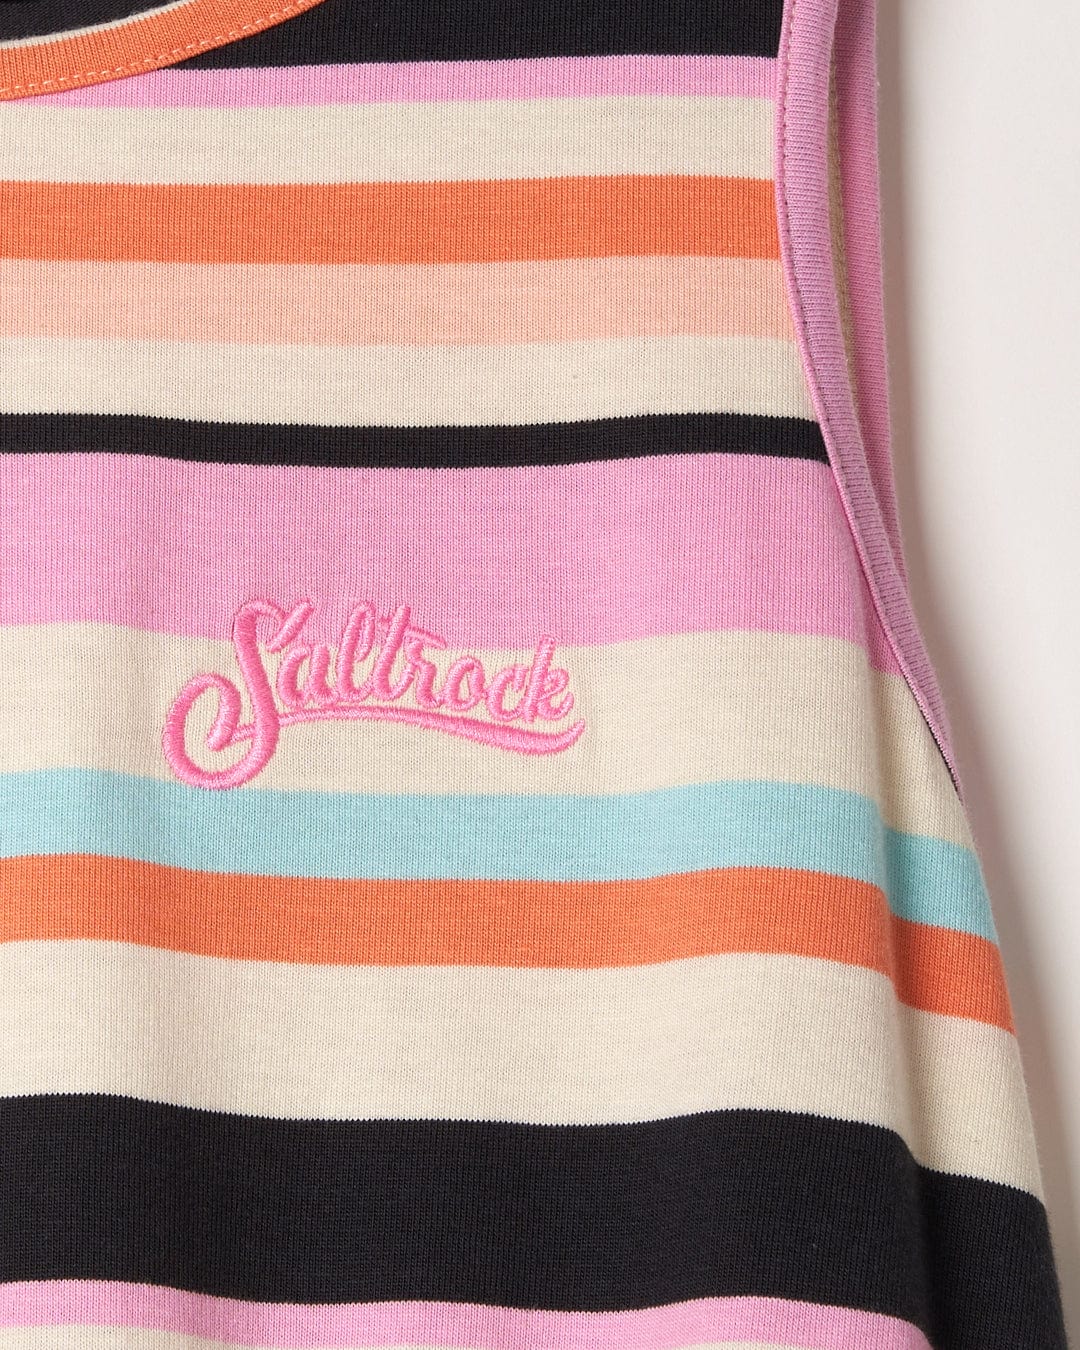 A close up of a striped Saltrock Juno Bauhaus - Womens Stripe Dress - Multi blanket.